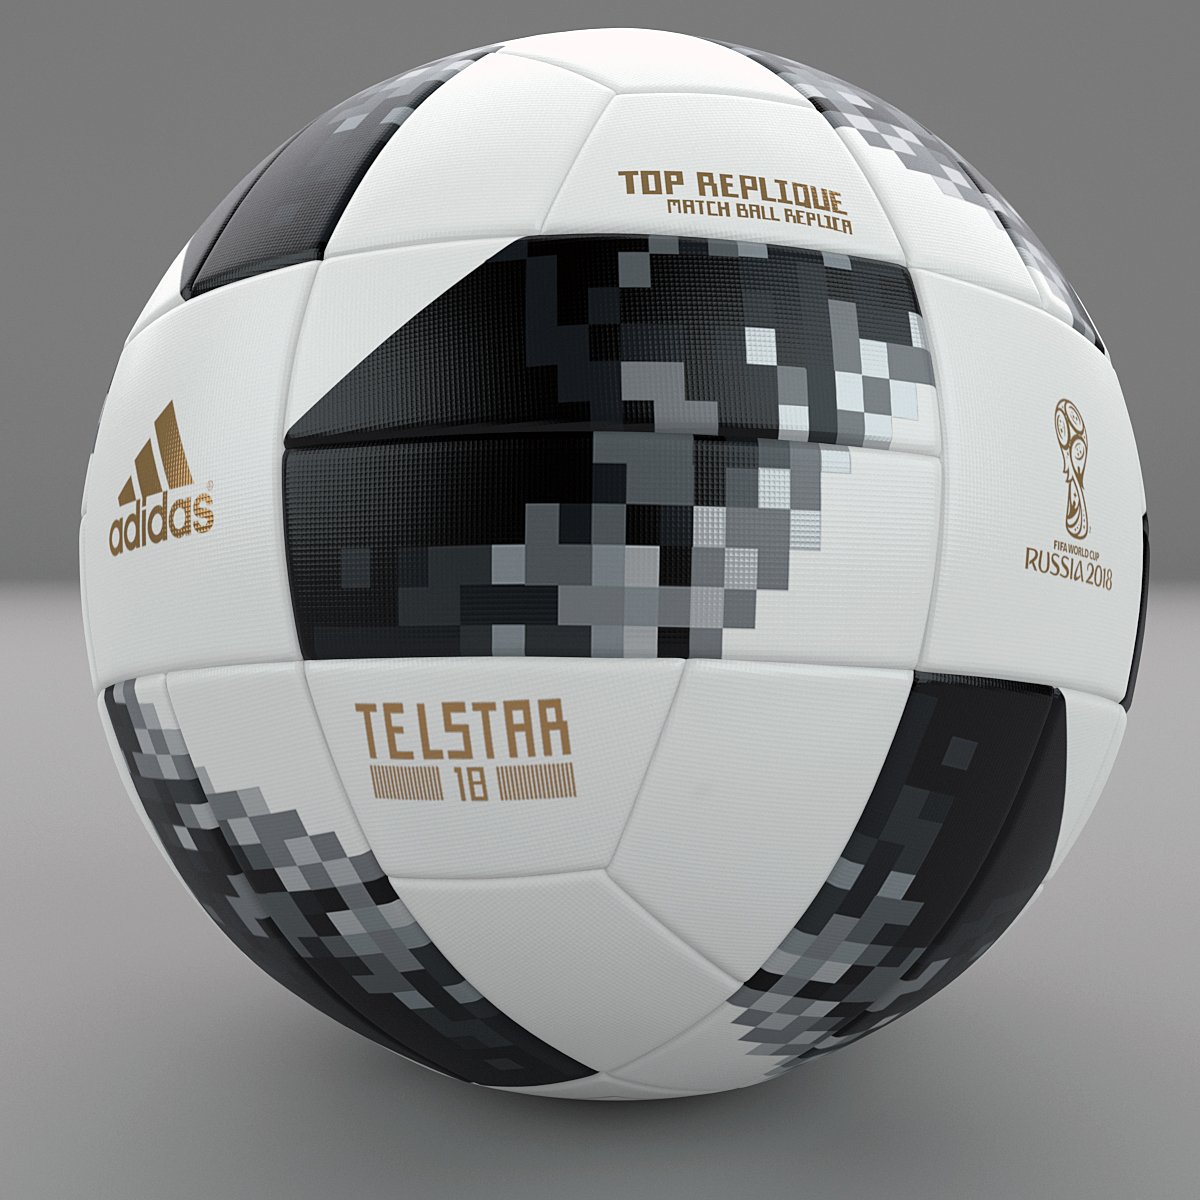 Exclusivo Sudán resistencia adidas telstar 18 world cup top replique 3D Model in Sports Equipment  3DExport